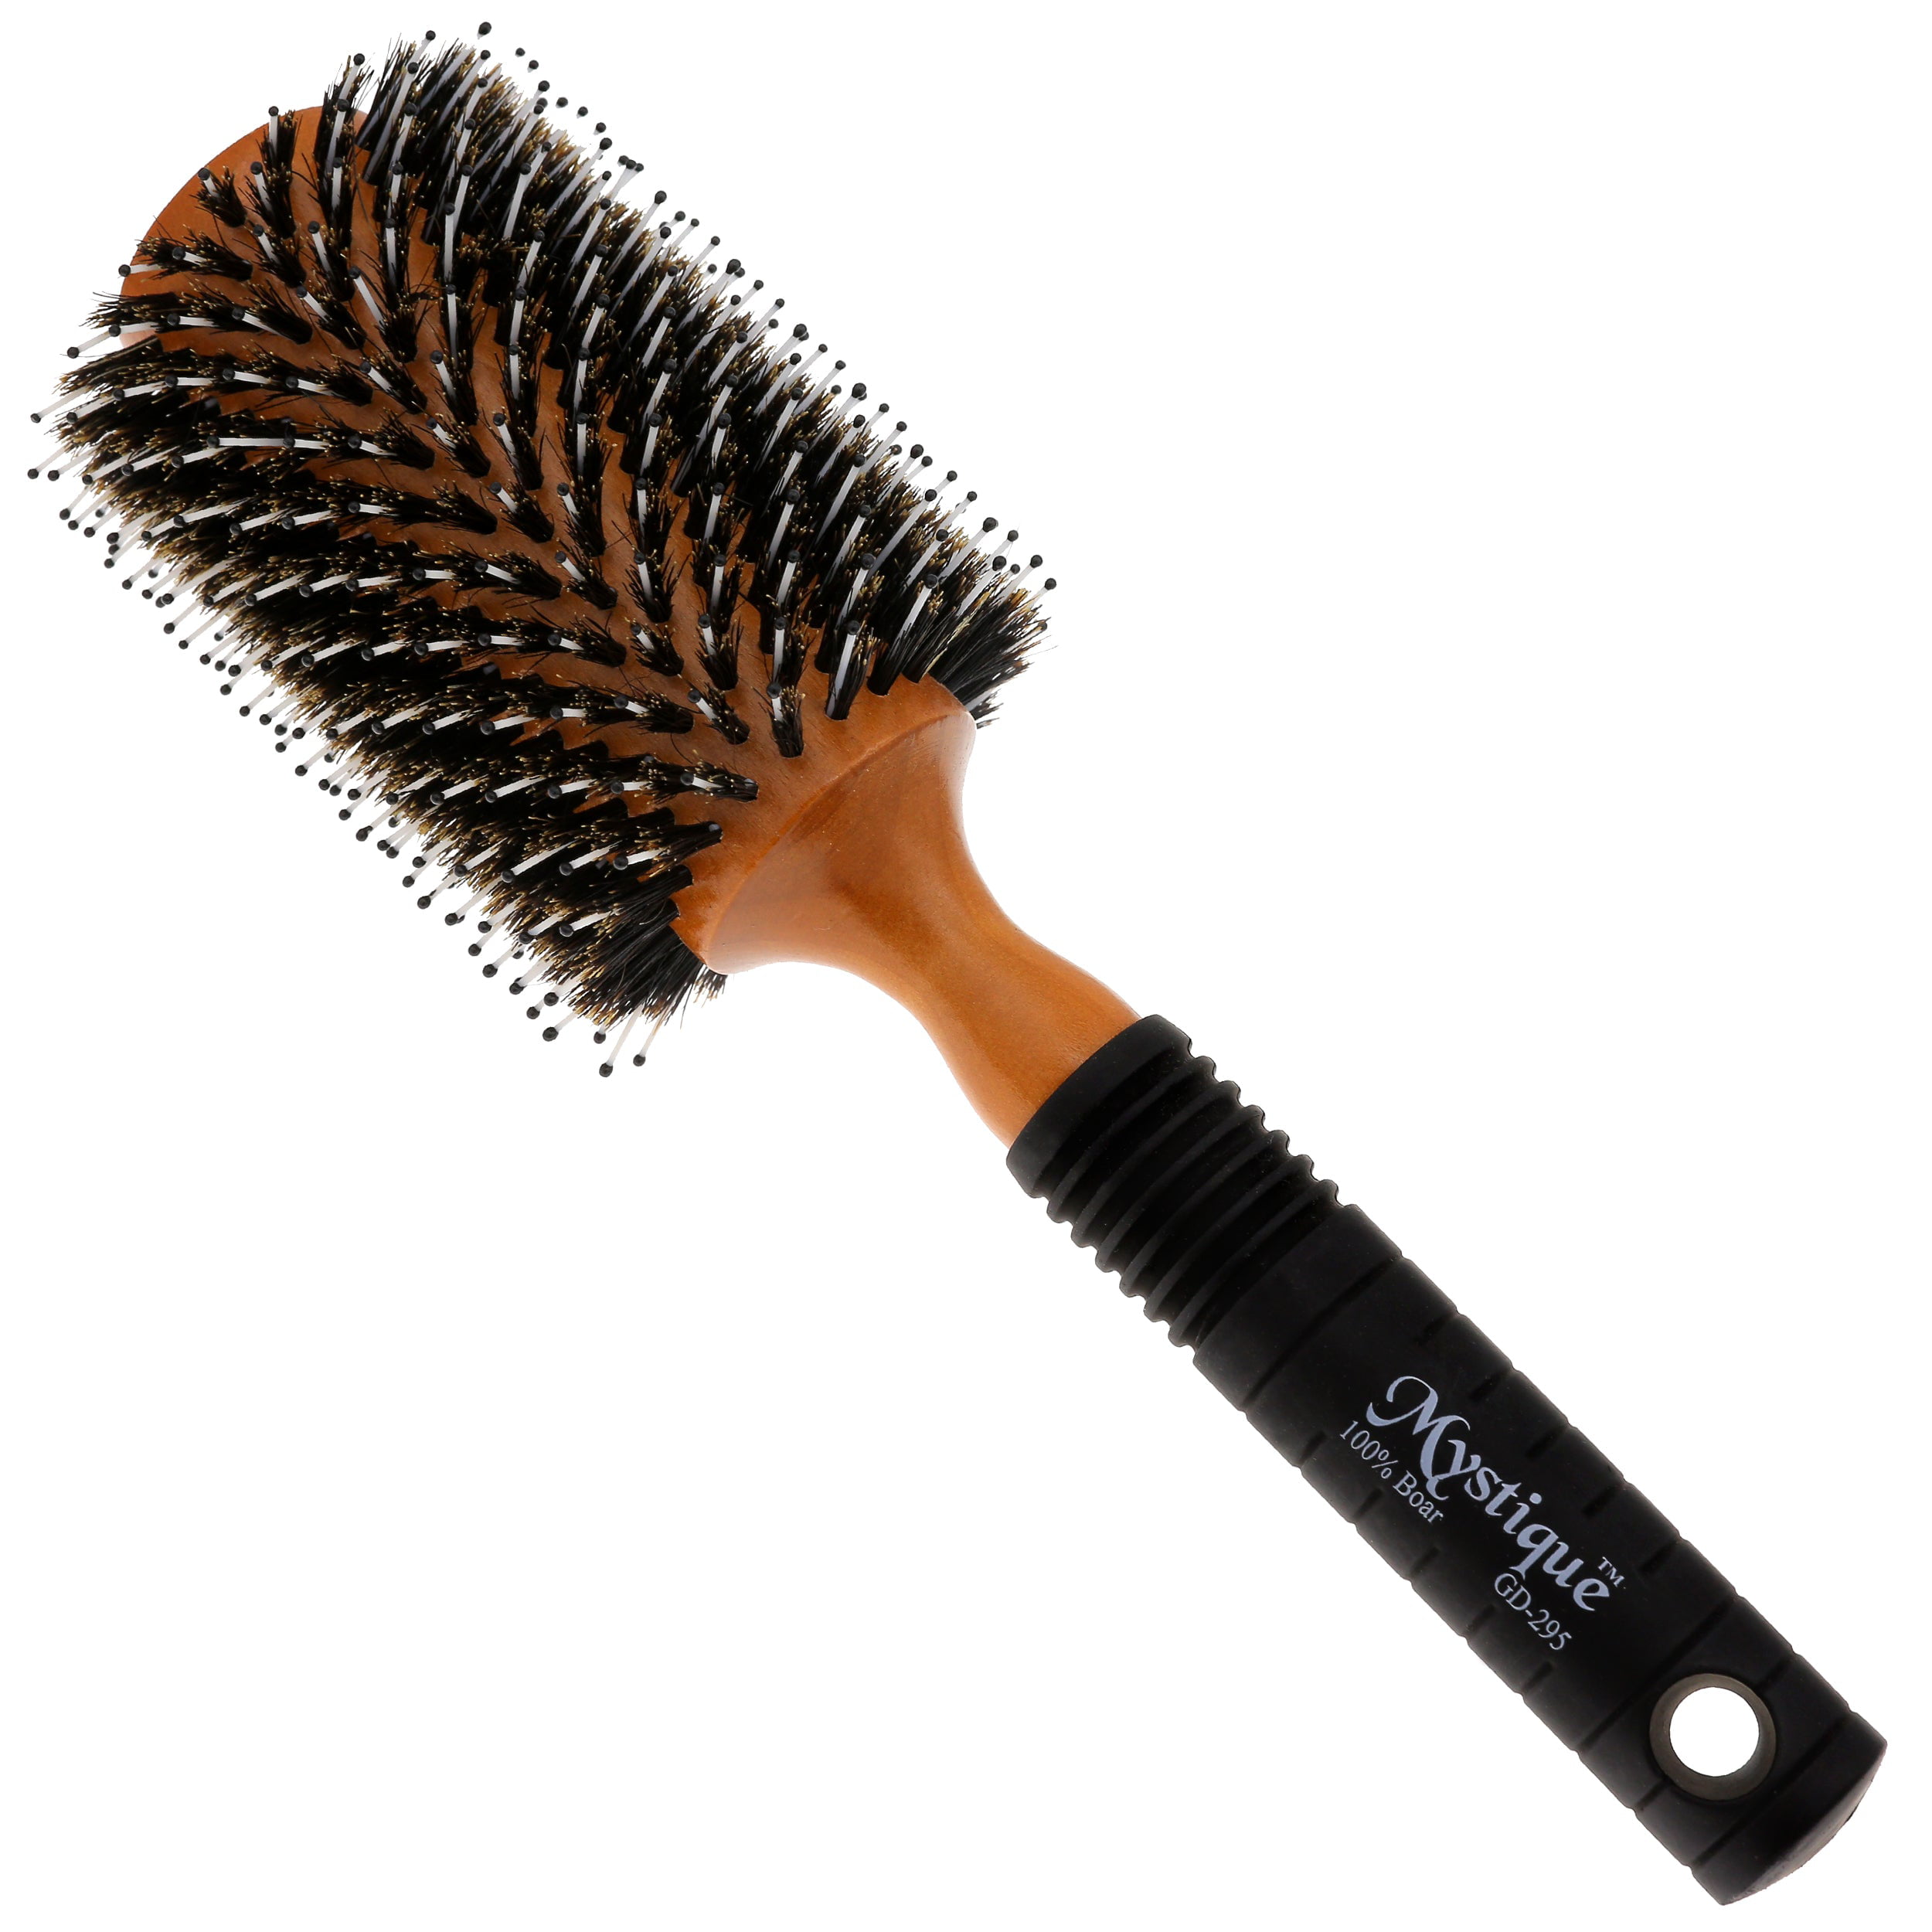 Mystique Medium Porcupine Style Round Hair Brush with Rubber Handle